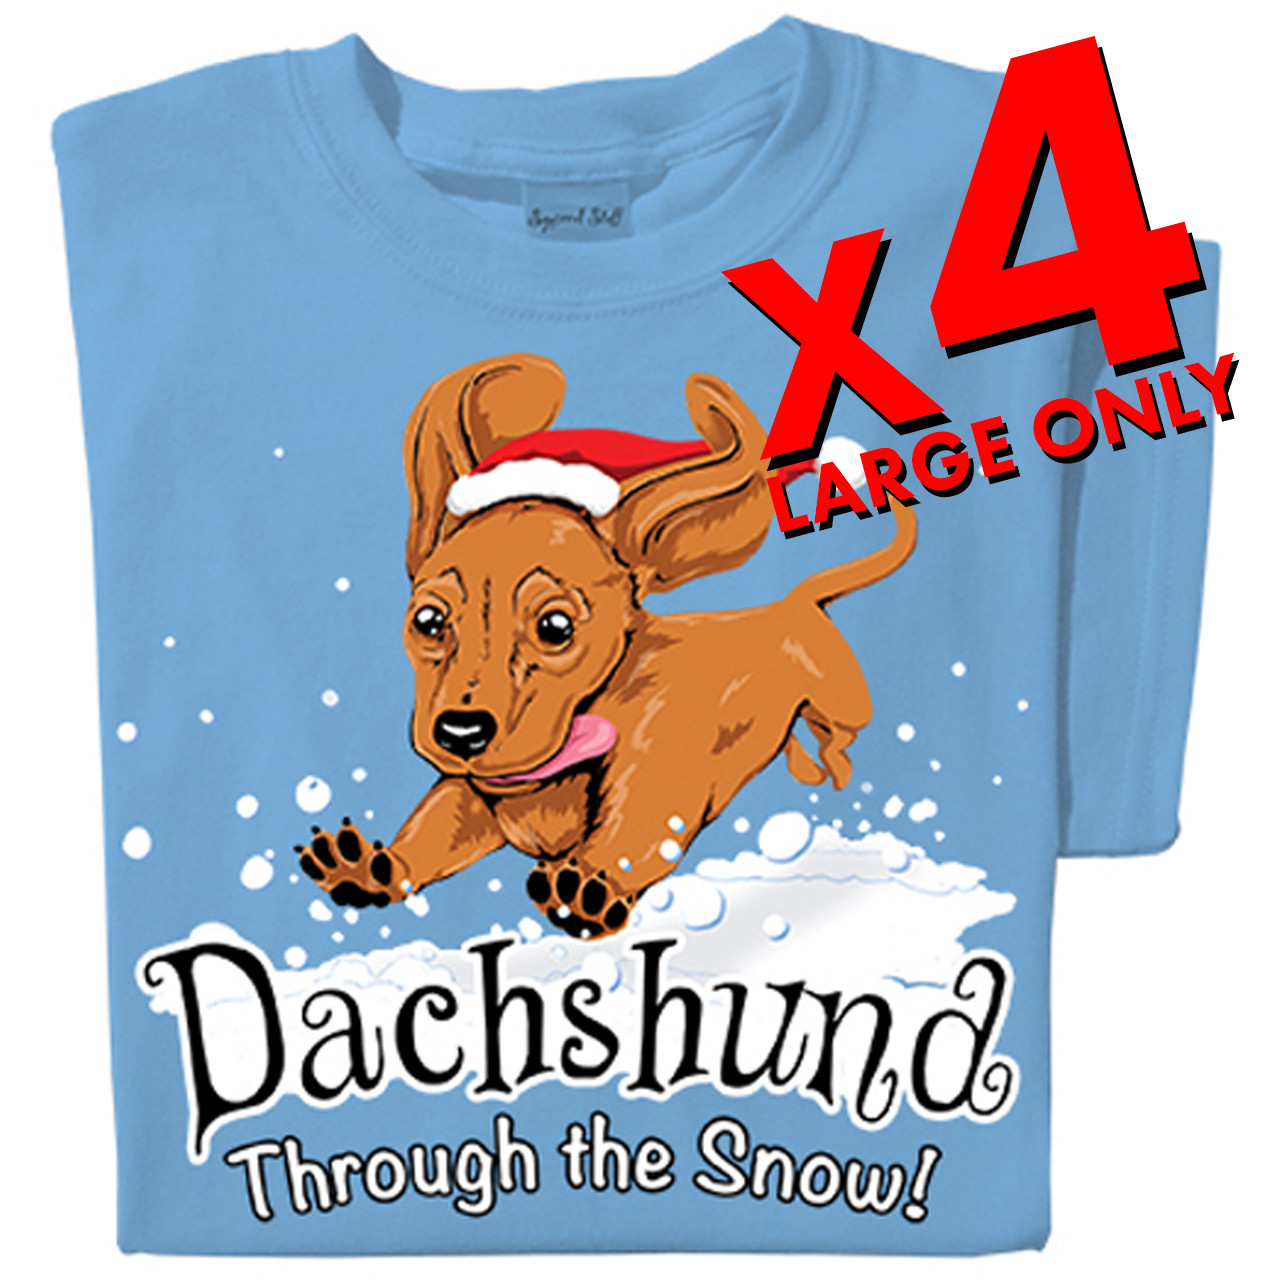 Dachshund Through the Snow T-shirt | Funny Dachshund T-shirt | 4 Pack